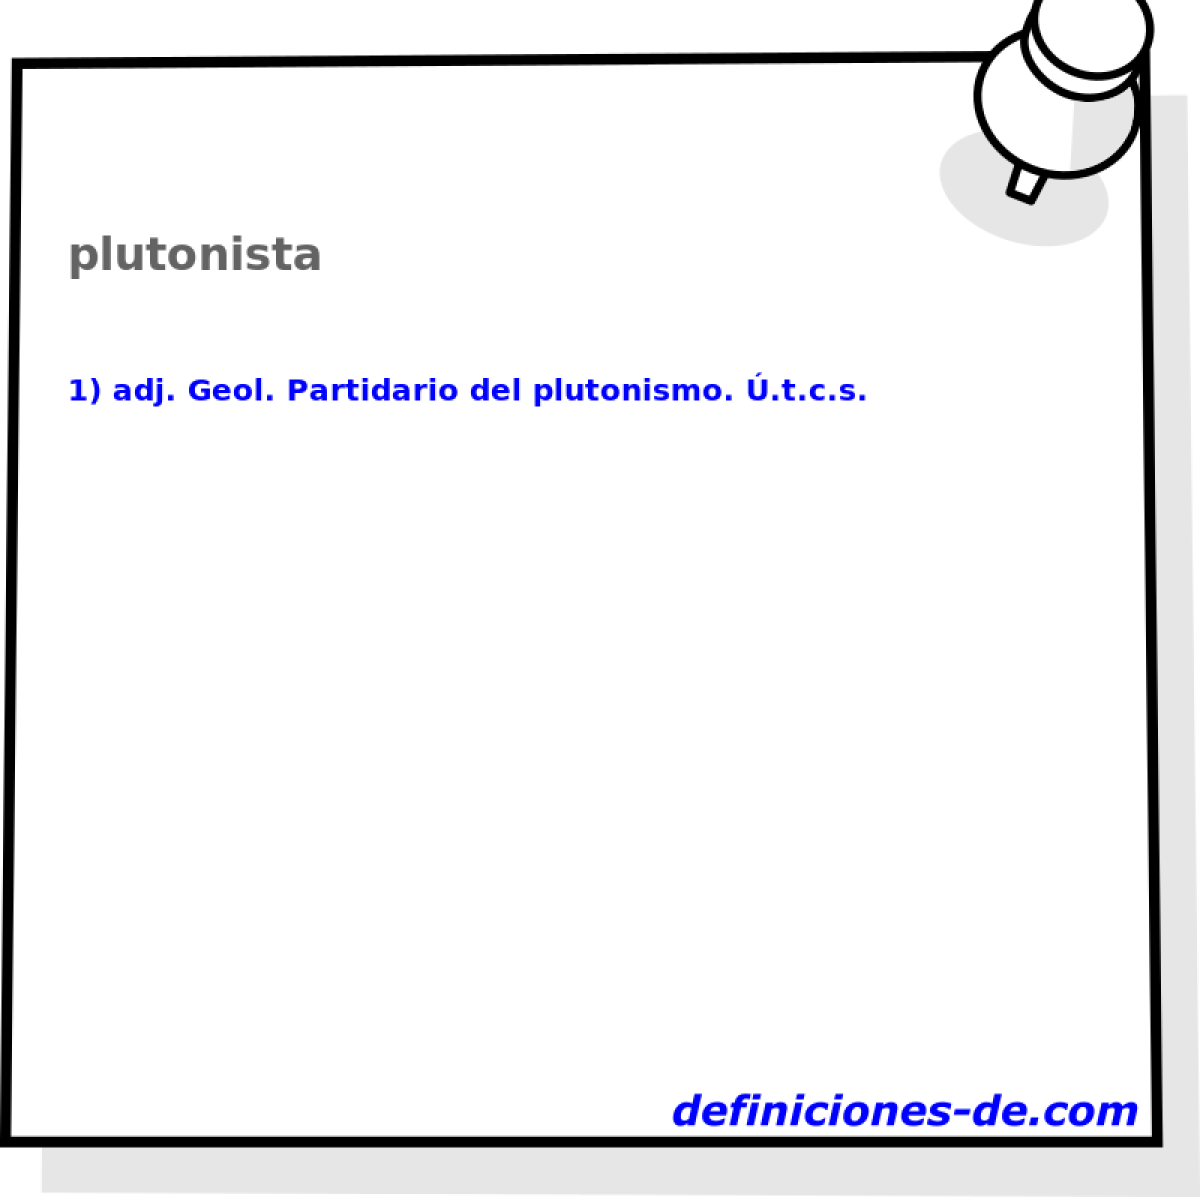 plutonista 